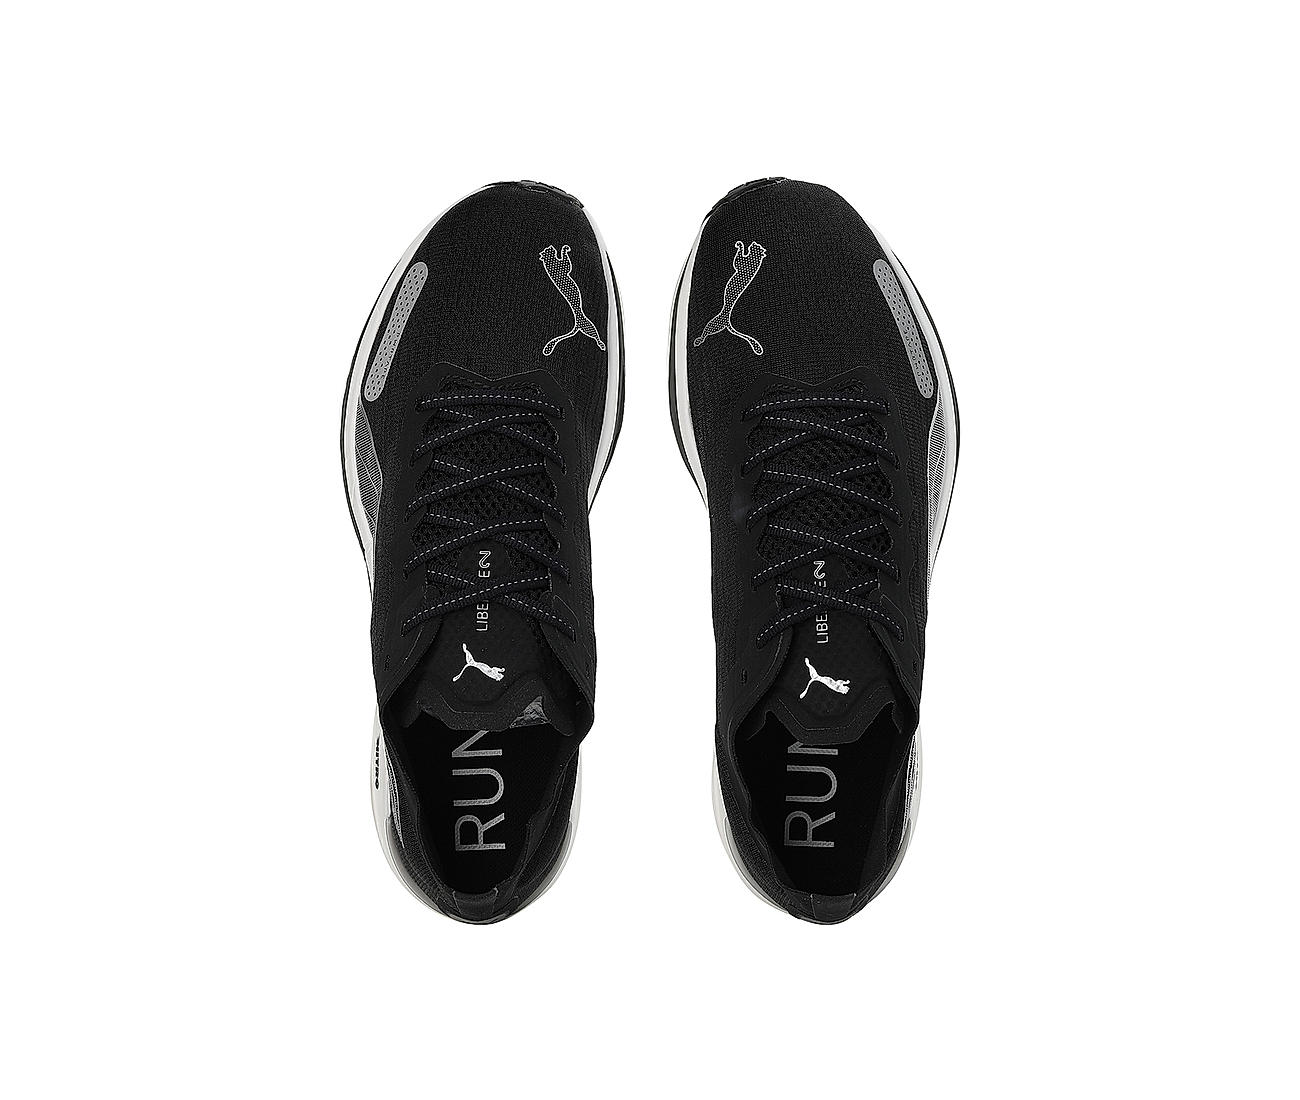 puma suede | Sneakers men fashion, Puma sports shoes, All black shoes